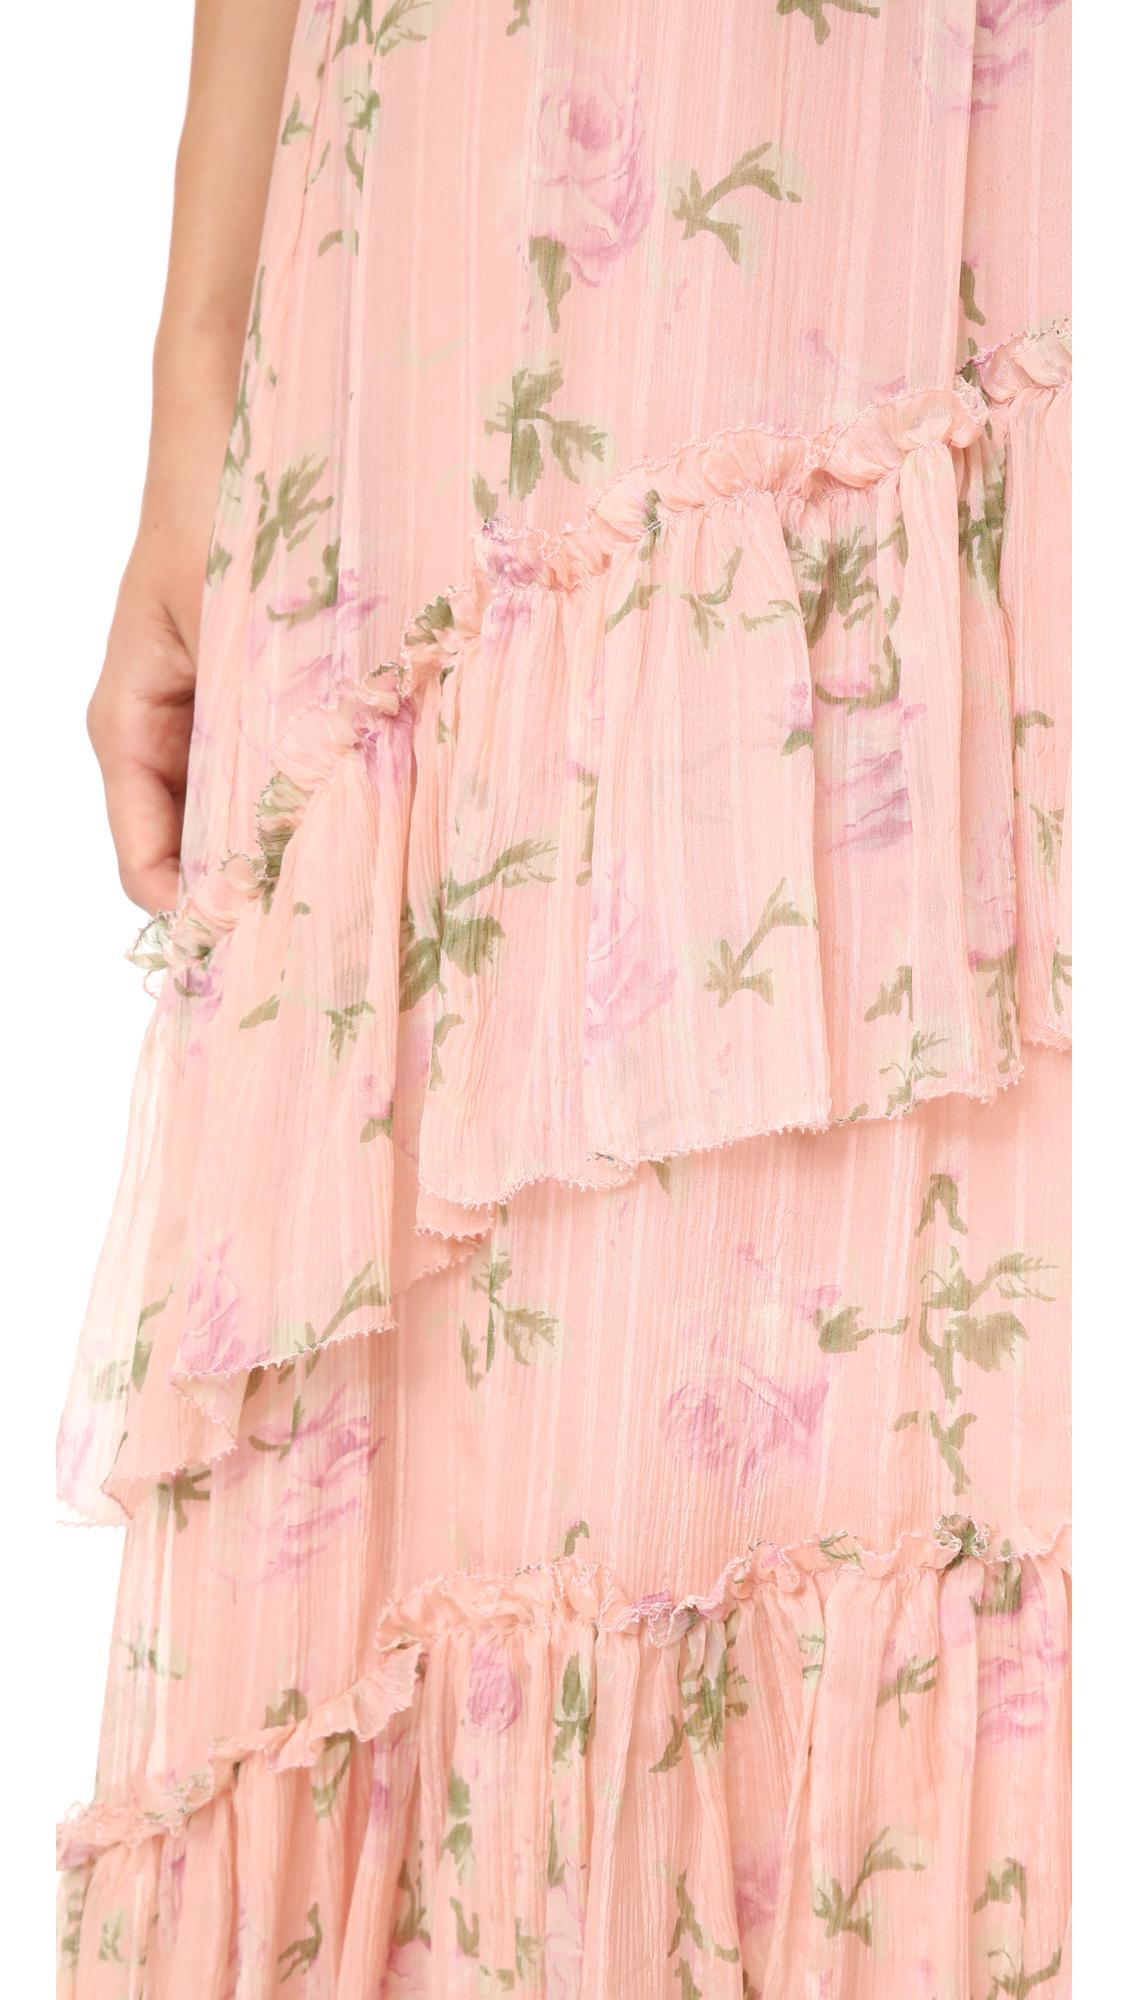 Ulla Johnson Silk Begonia Skirt in Rose (Pink) - Lyst